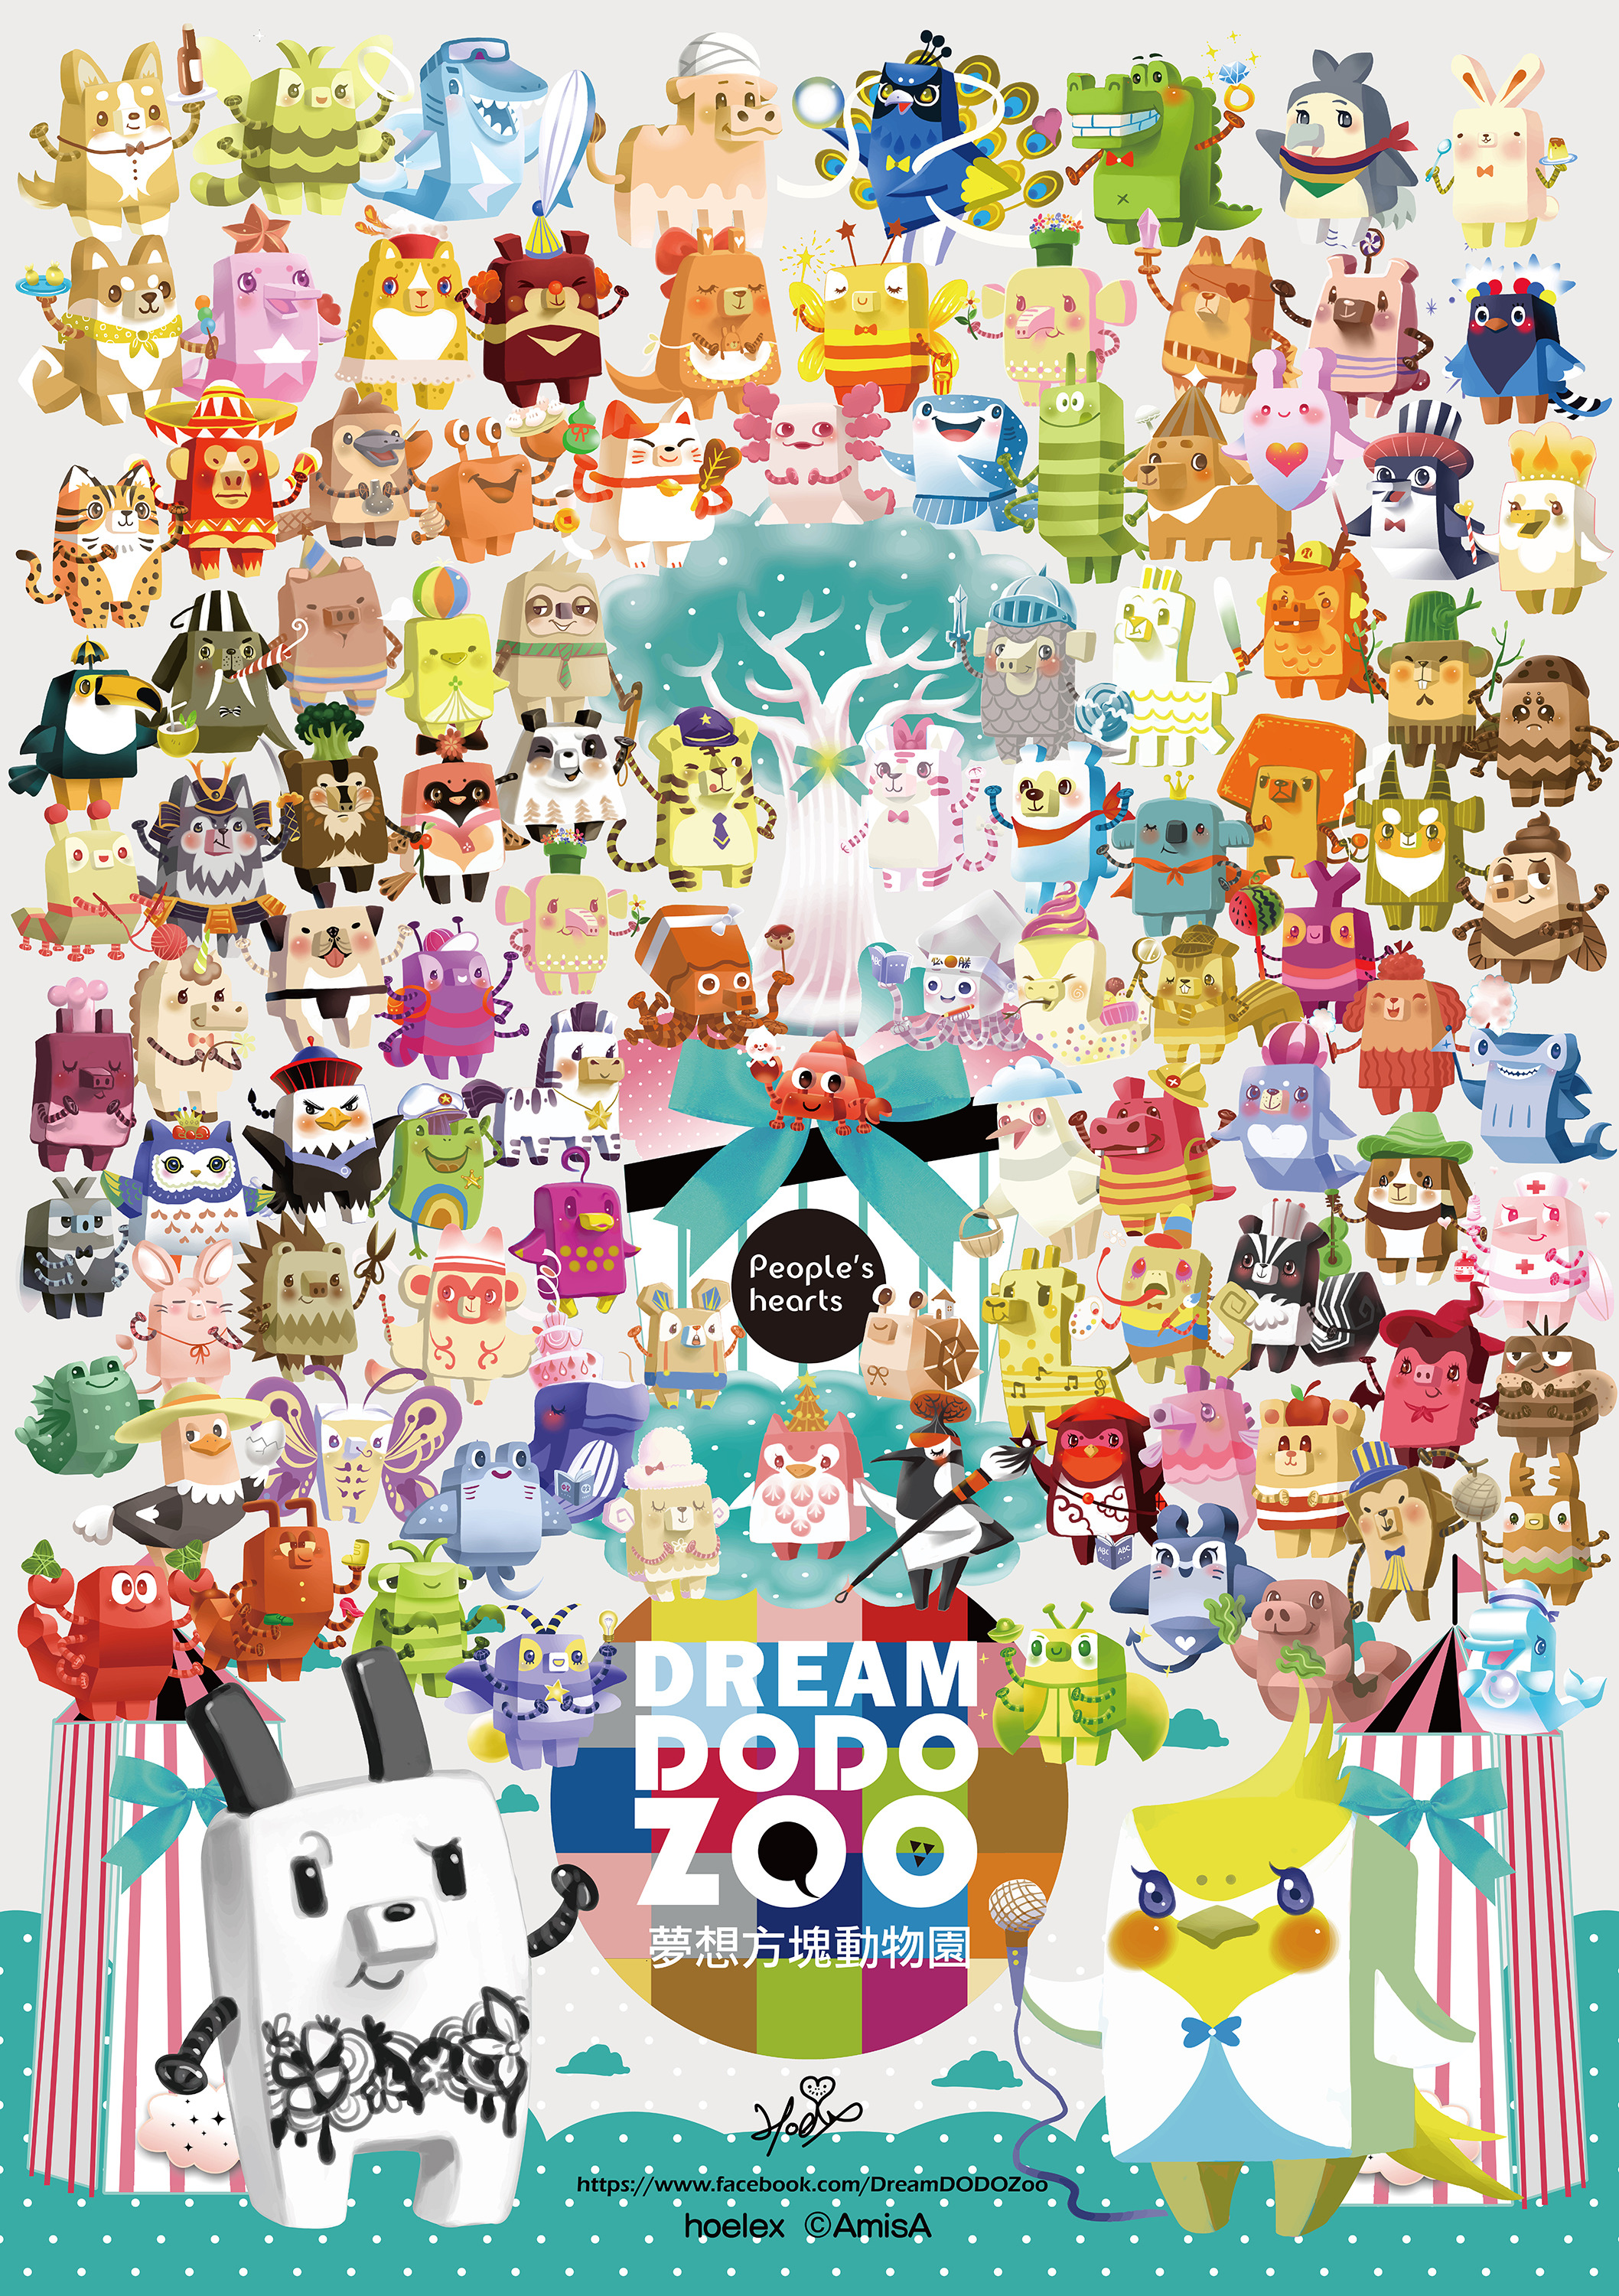 Dream DODO ZOO夢想方塊動物園(大和圖)20200714(小).jpg